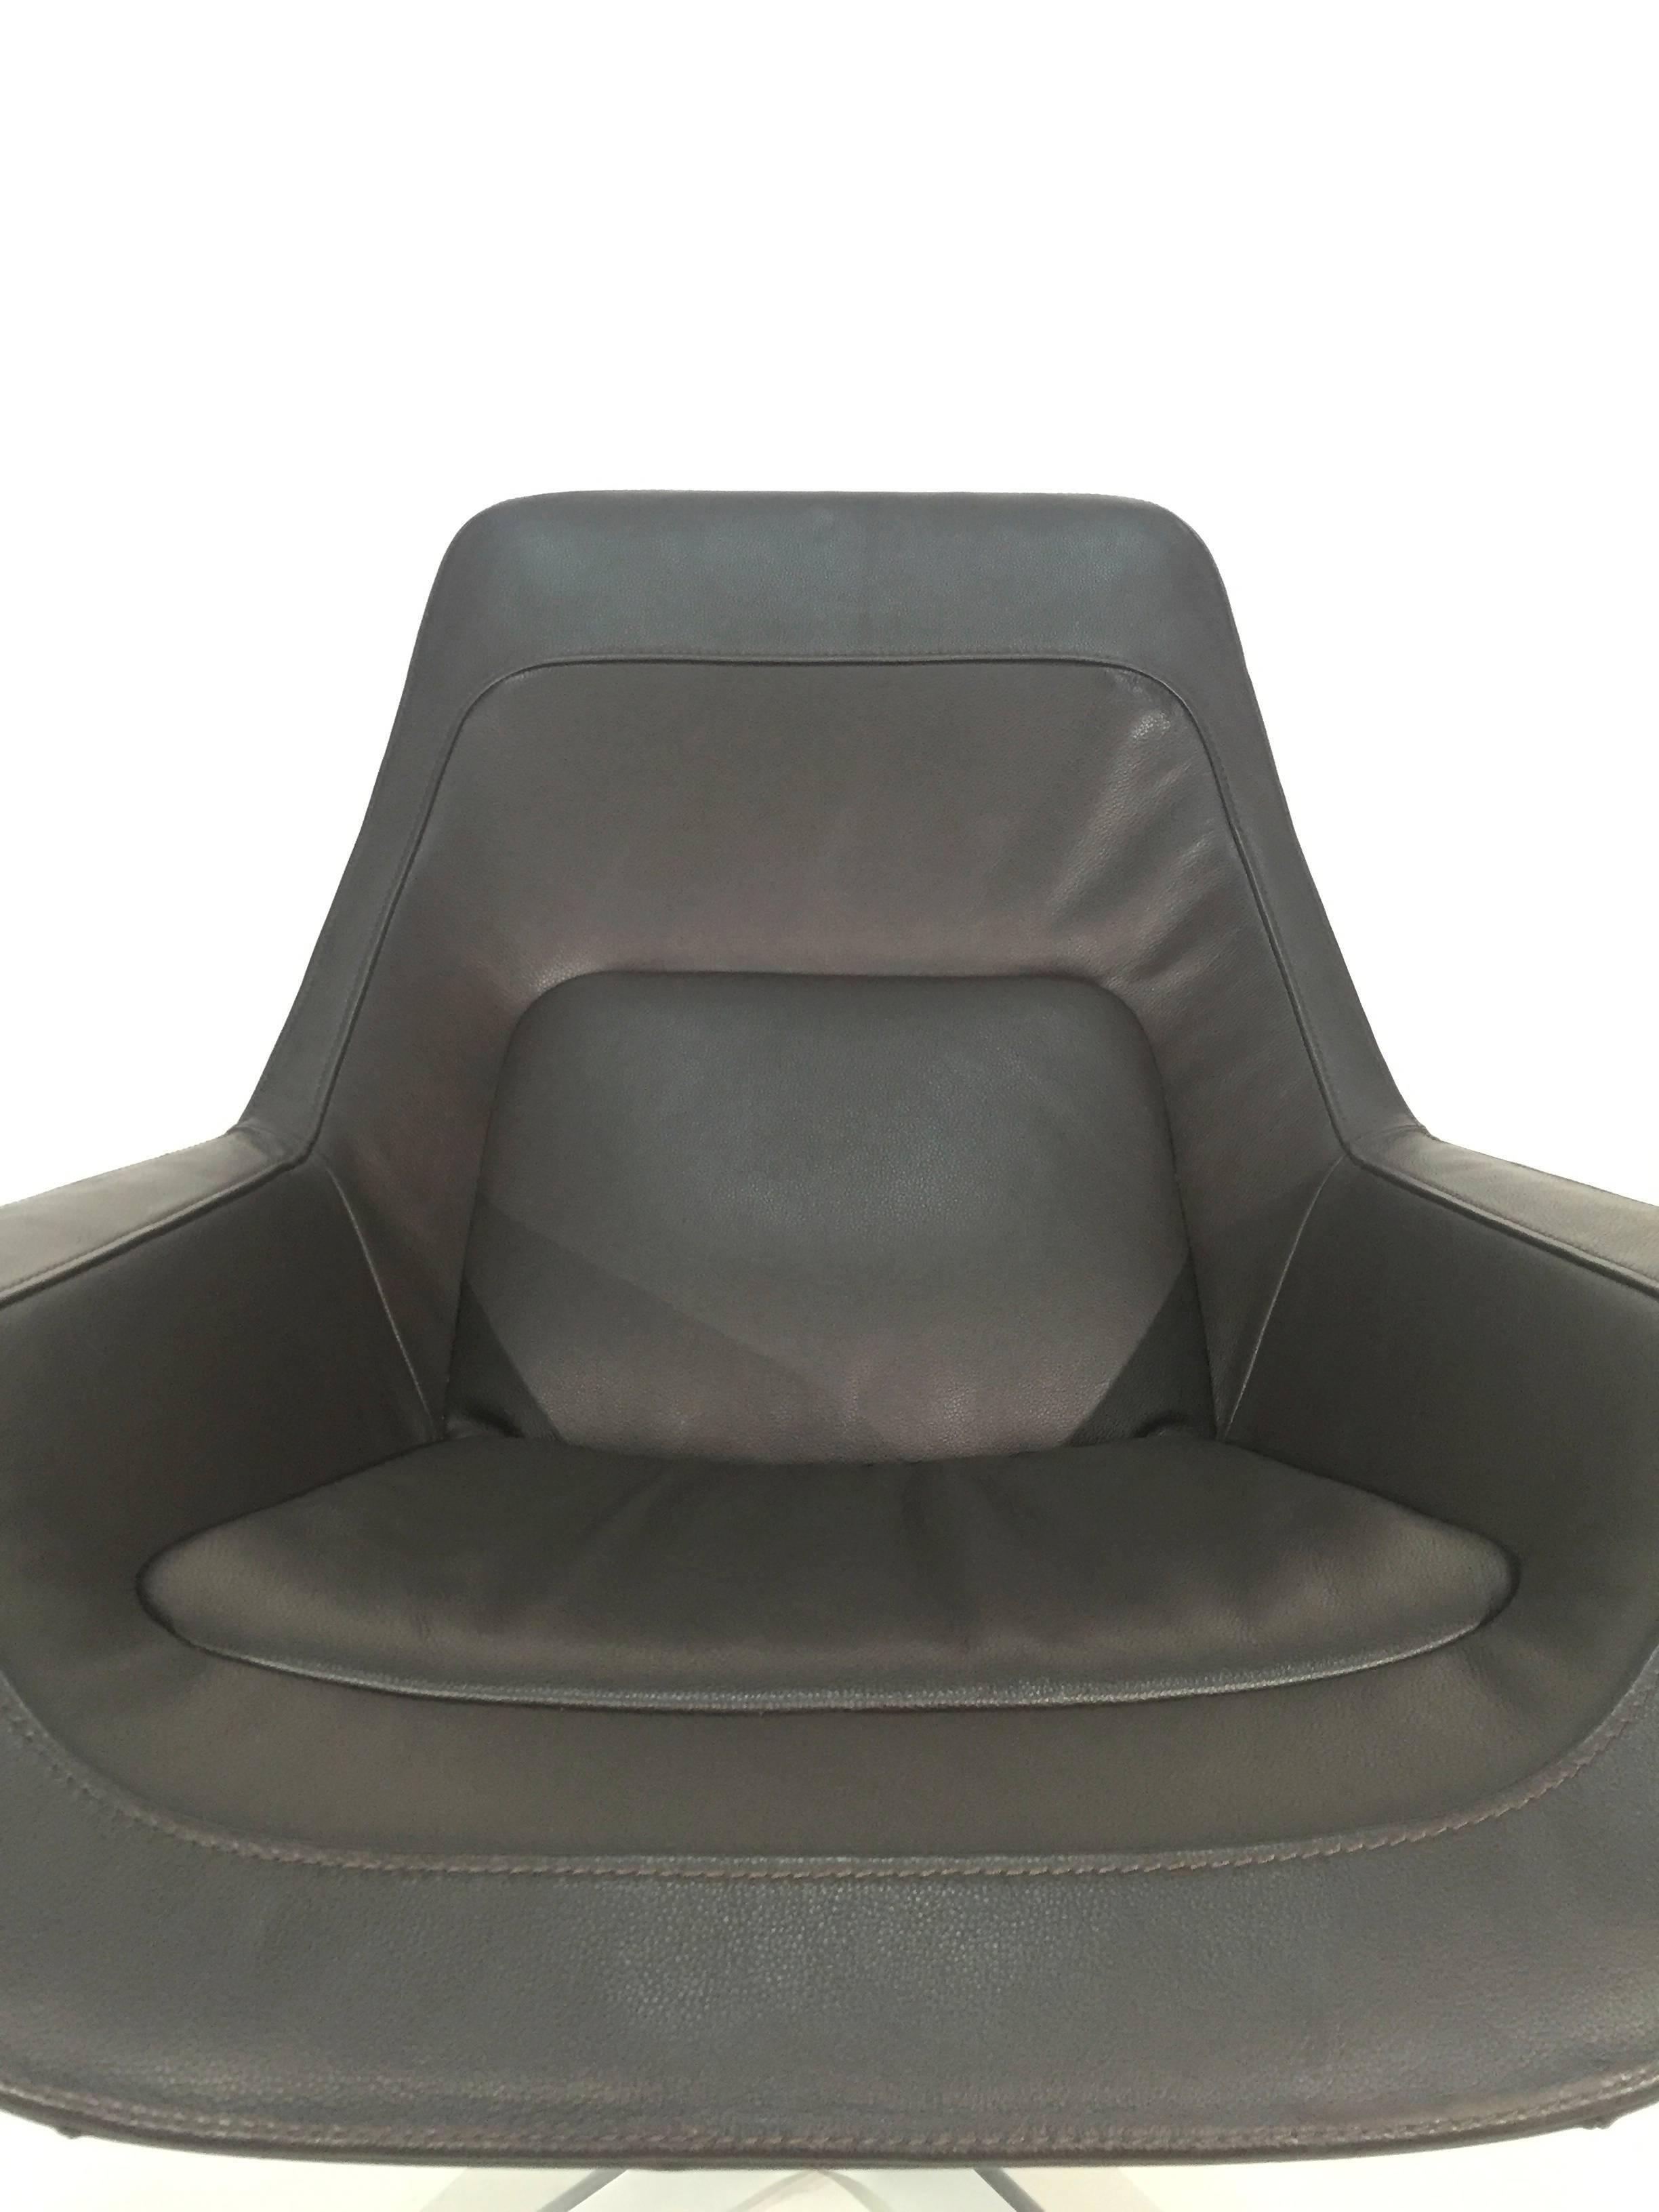 De Sede DS-144 Armchair in Leather Select Cigarro 2